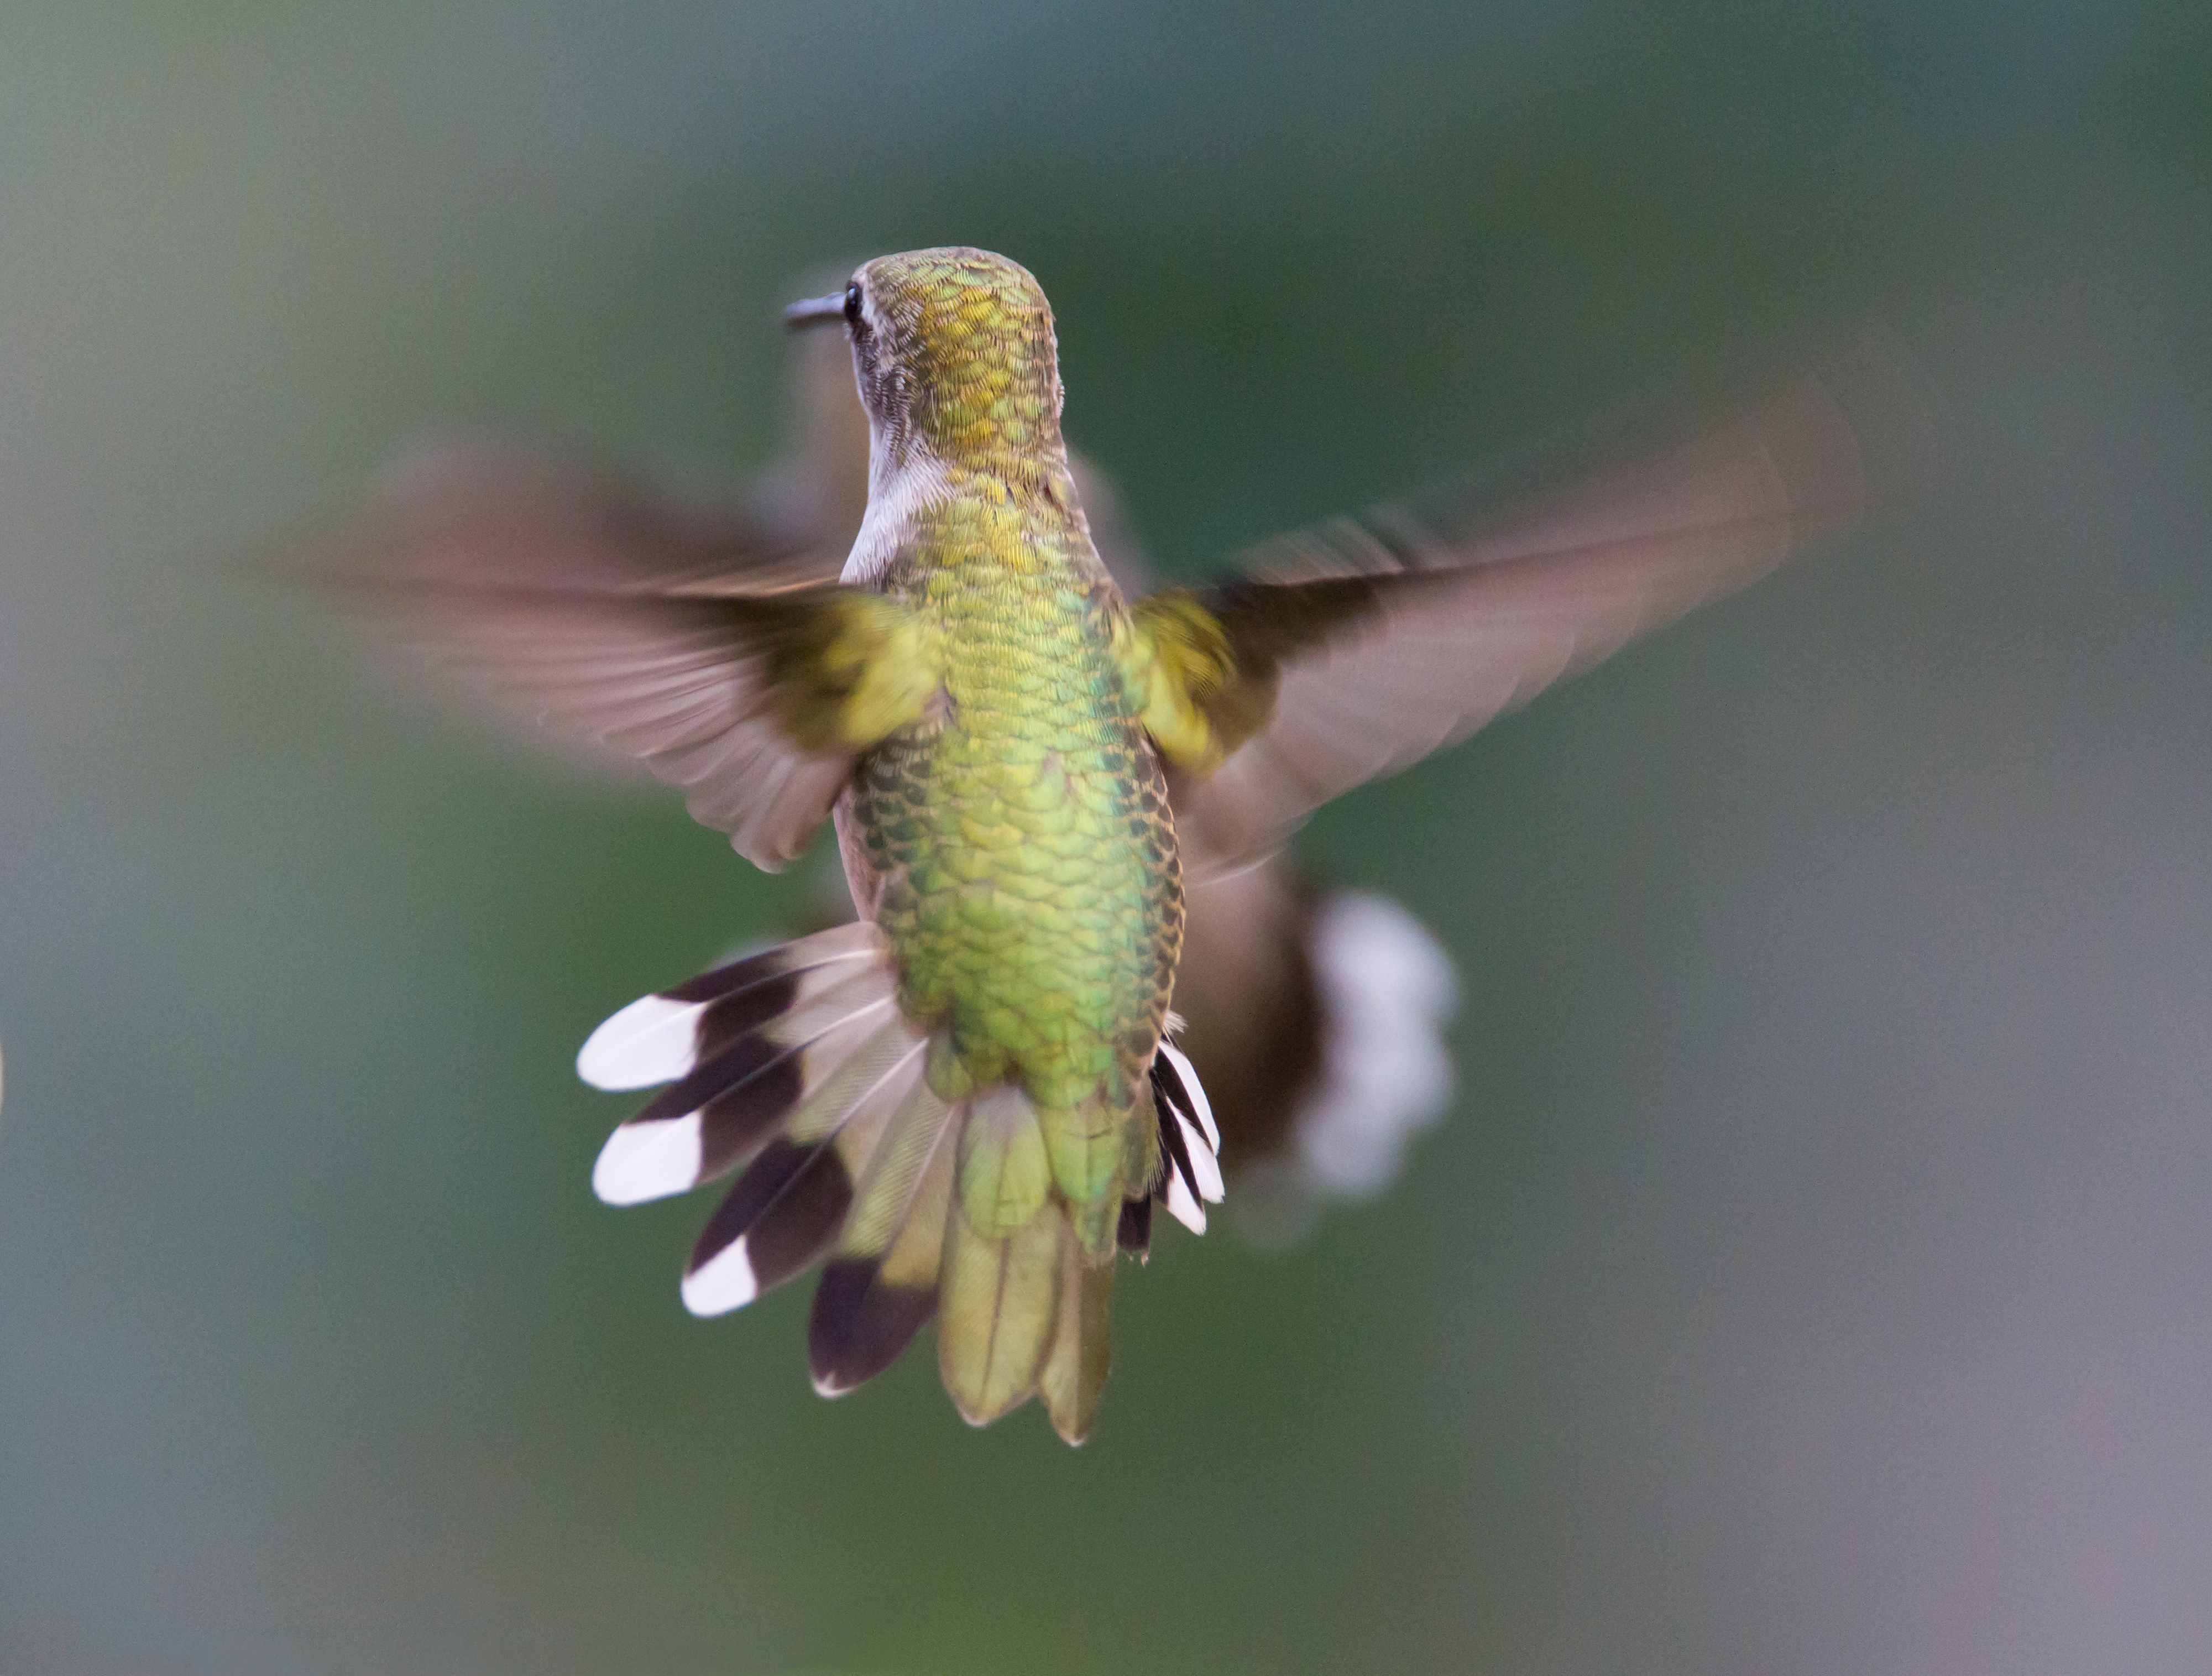 File:Hummingbird Aerodynamics of flight.jpg - Wikimedia Commons